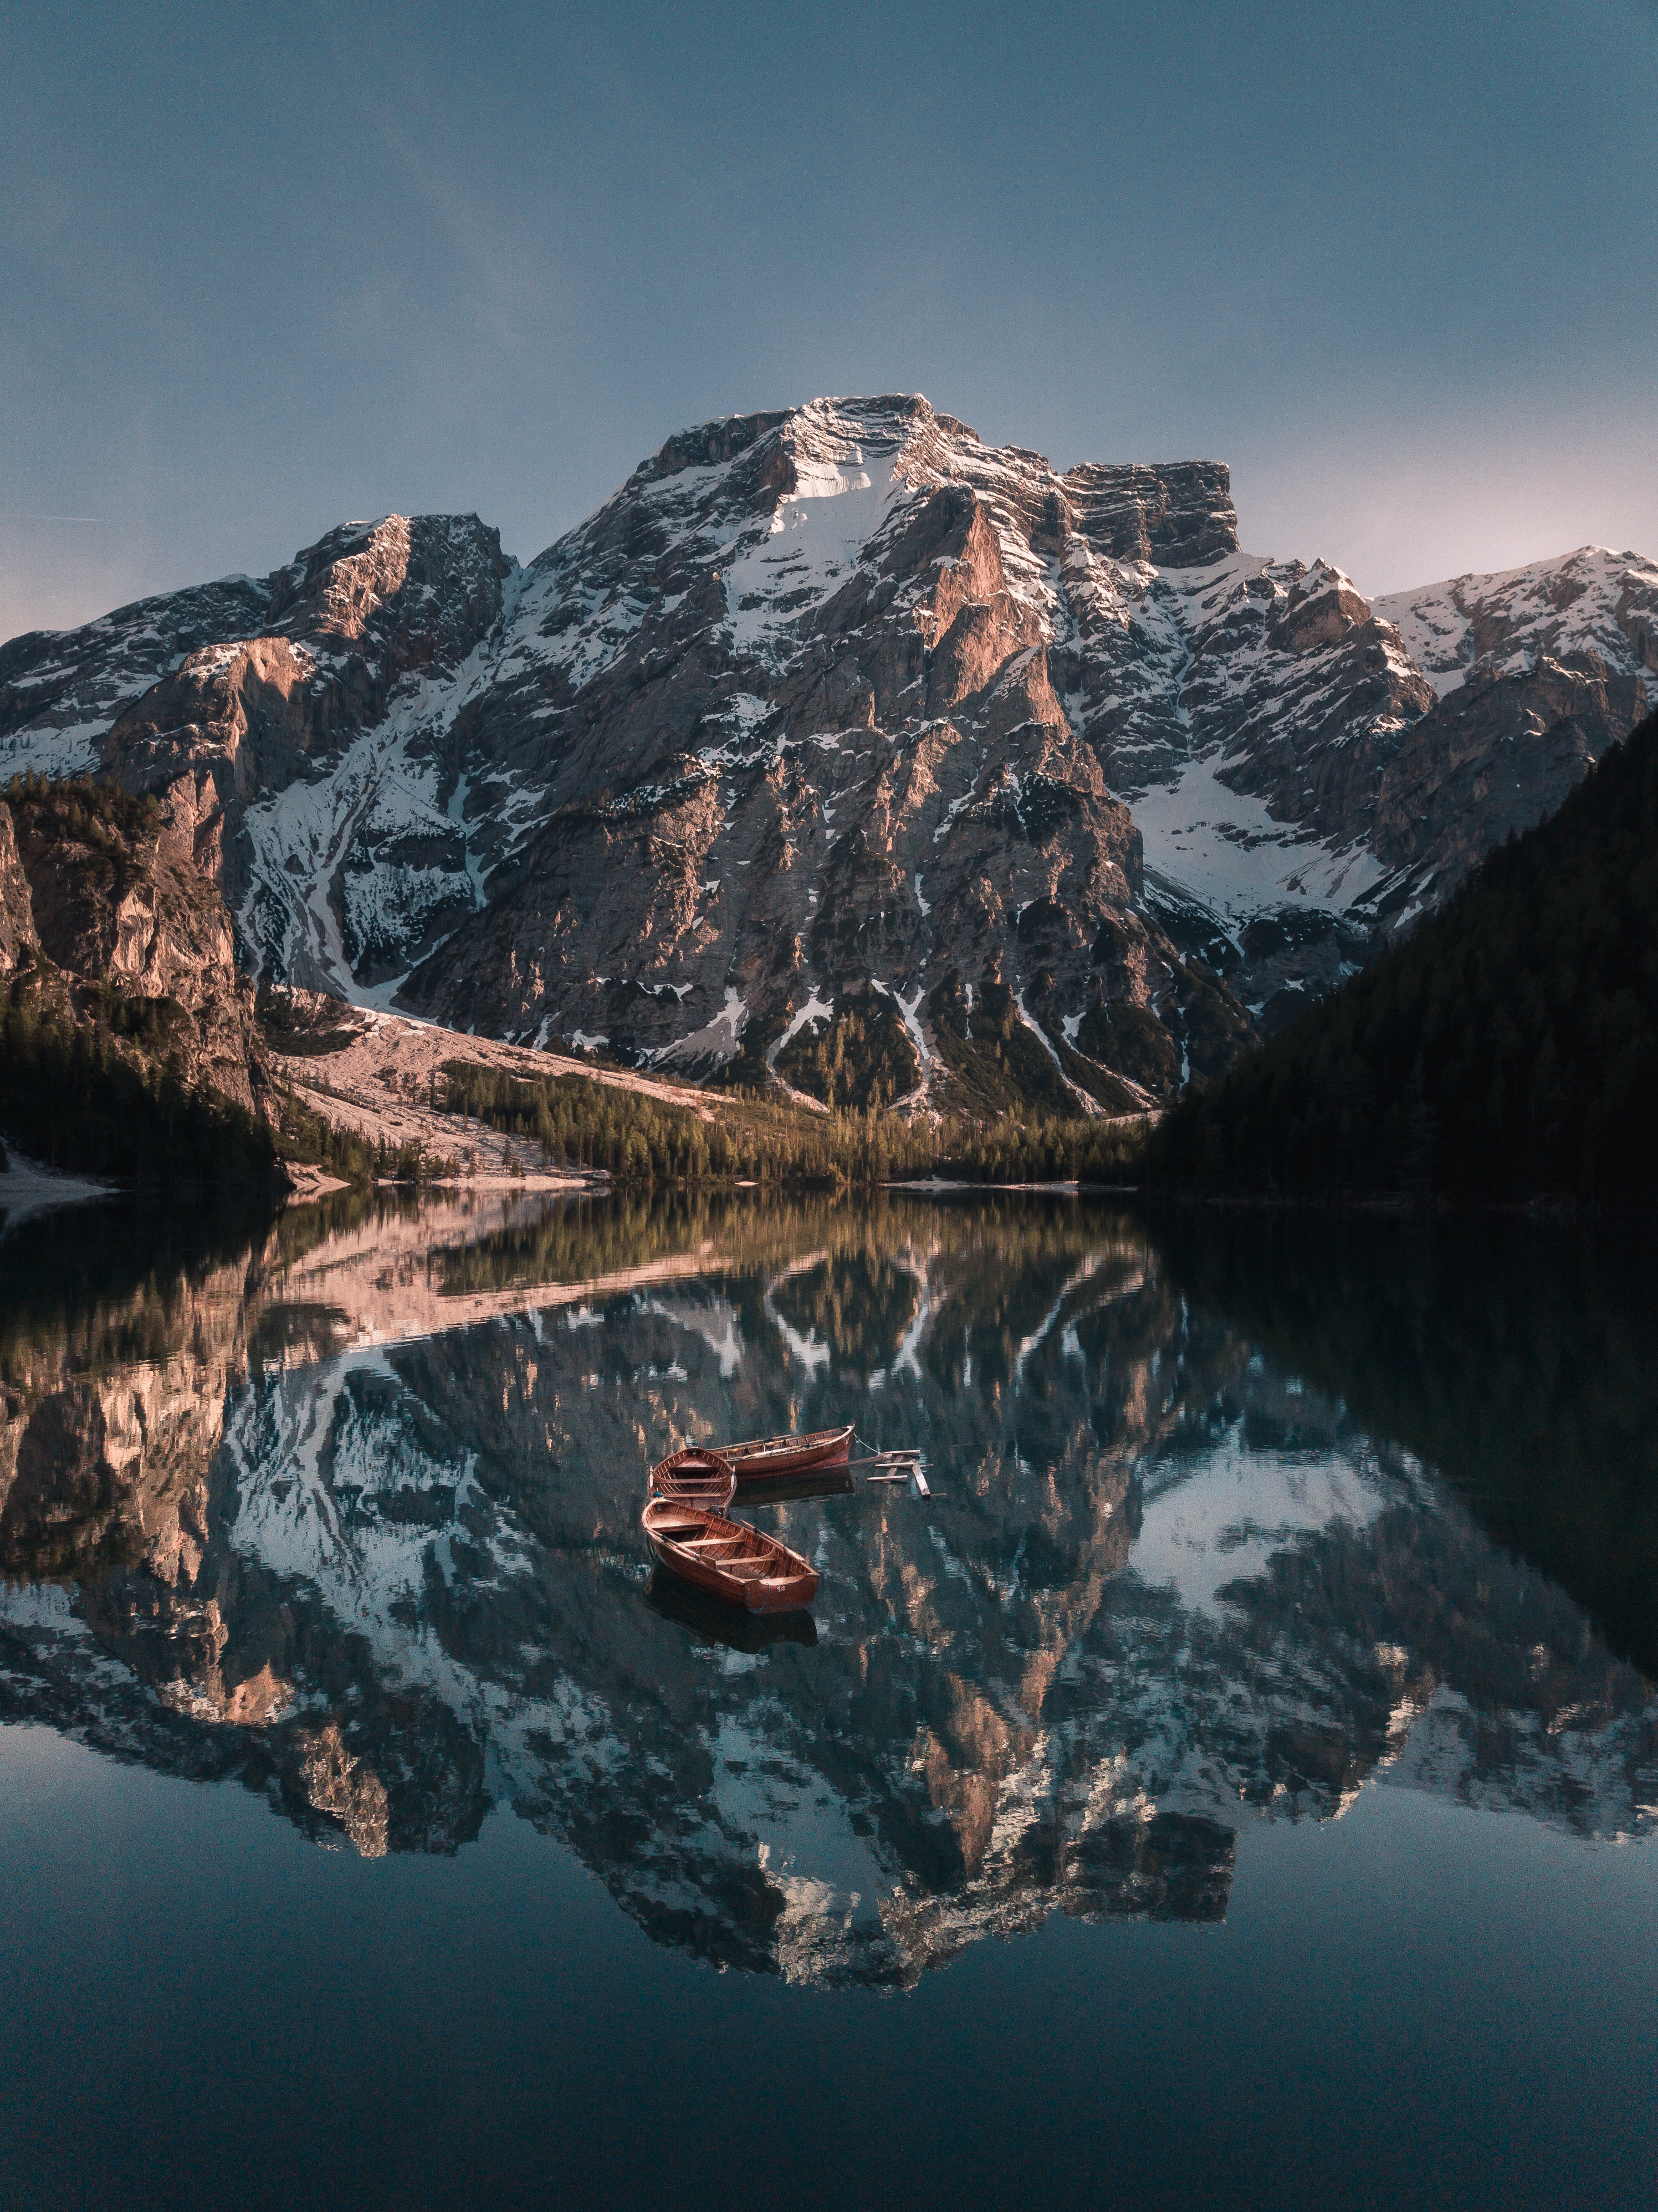 mountains, lake, reflection, landscape, nature, boats